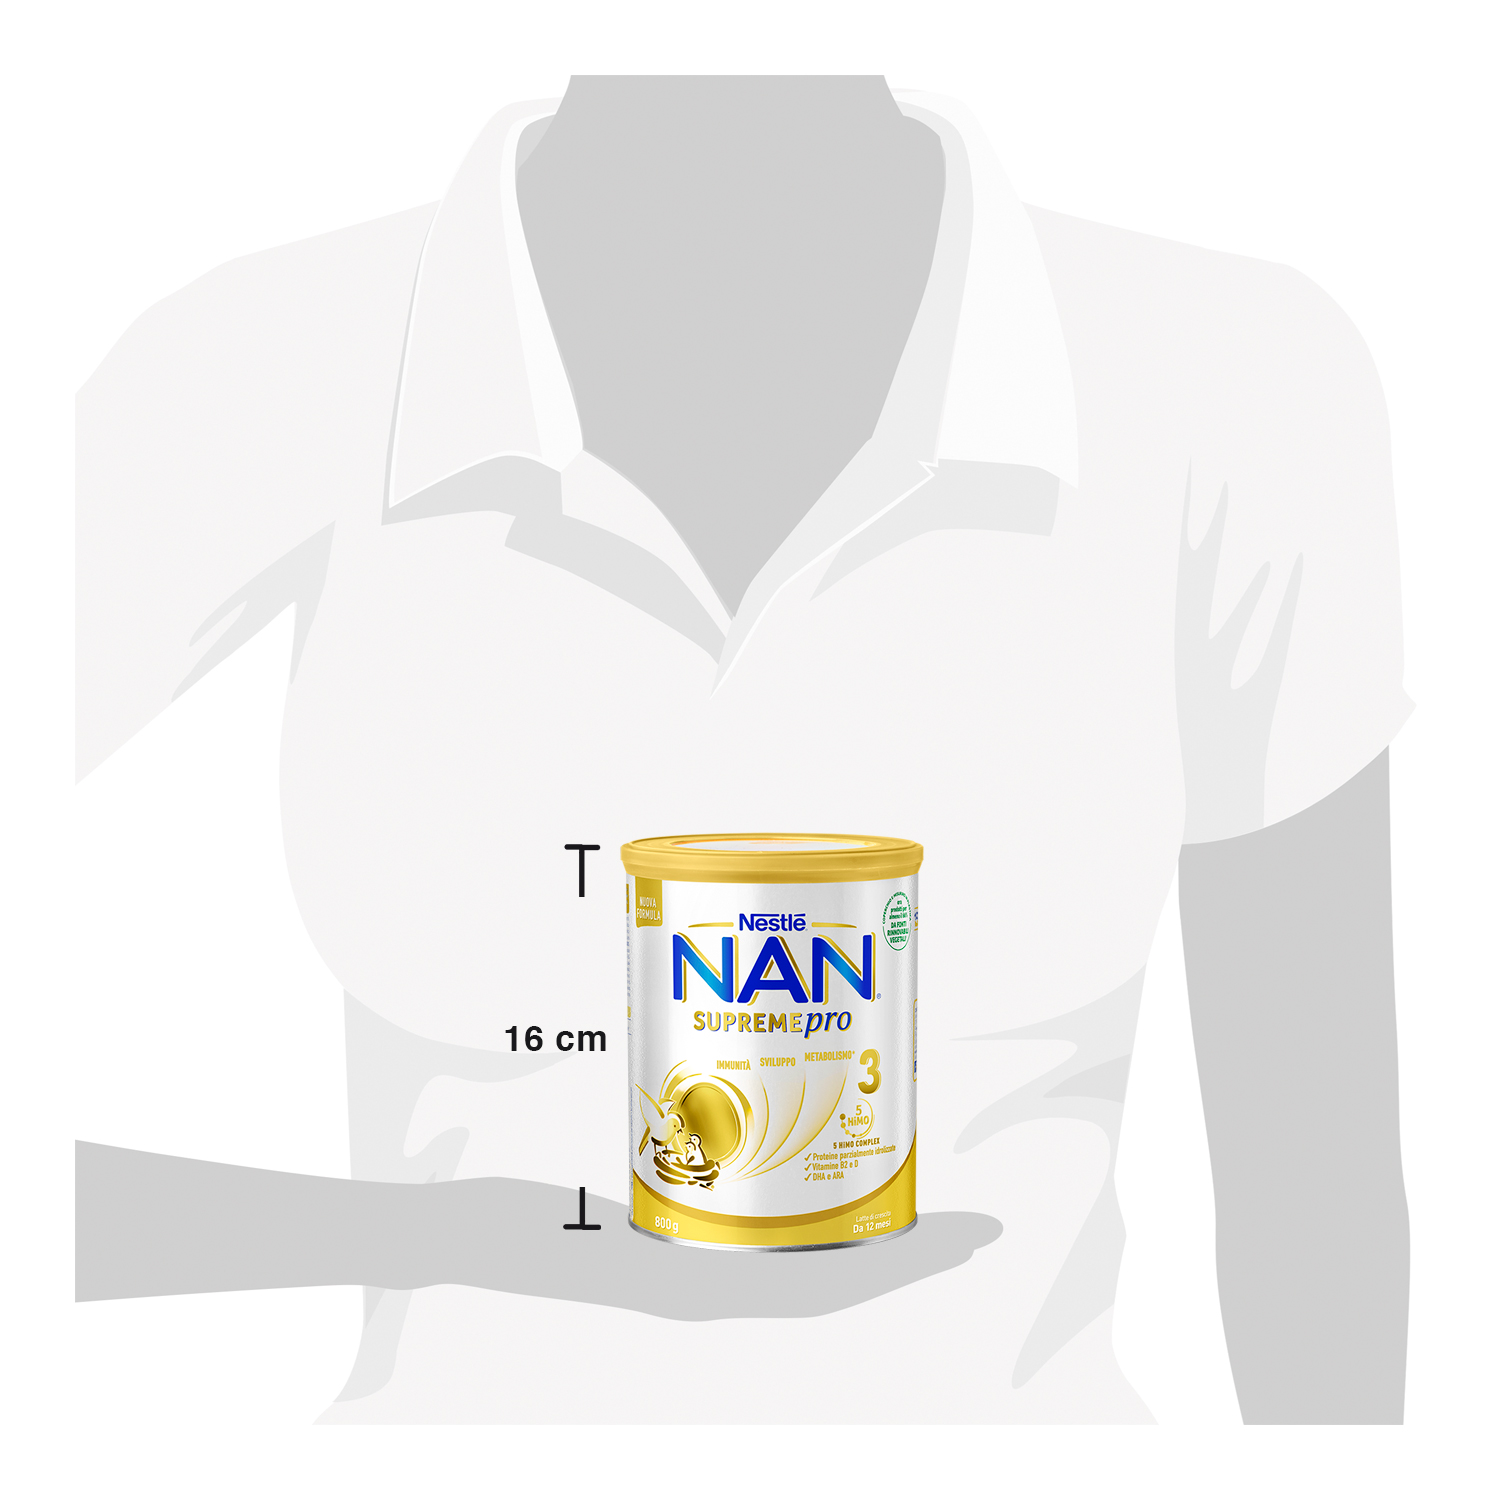 Nestlé nan supremepro 3, da 12 mesi. latte di crescita in polvere, latta da 800g - Nestlé